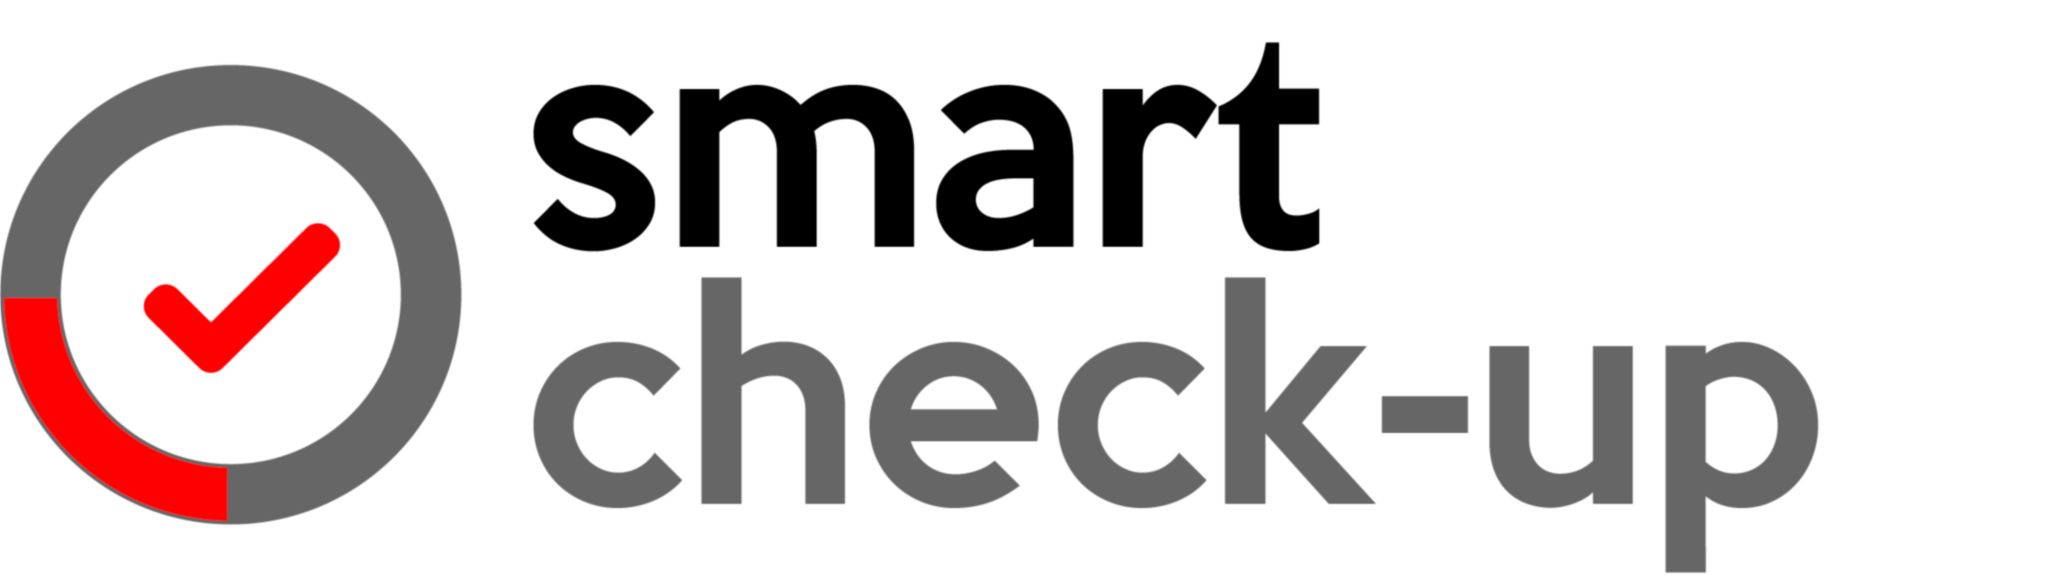 Smart CheckUp Logo